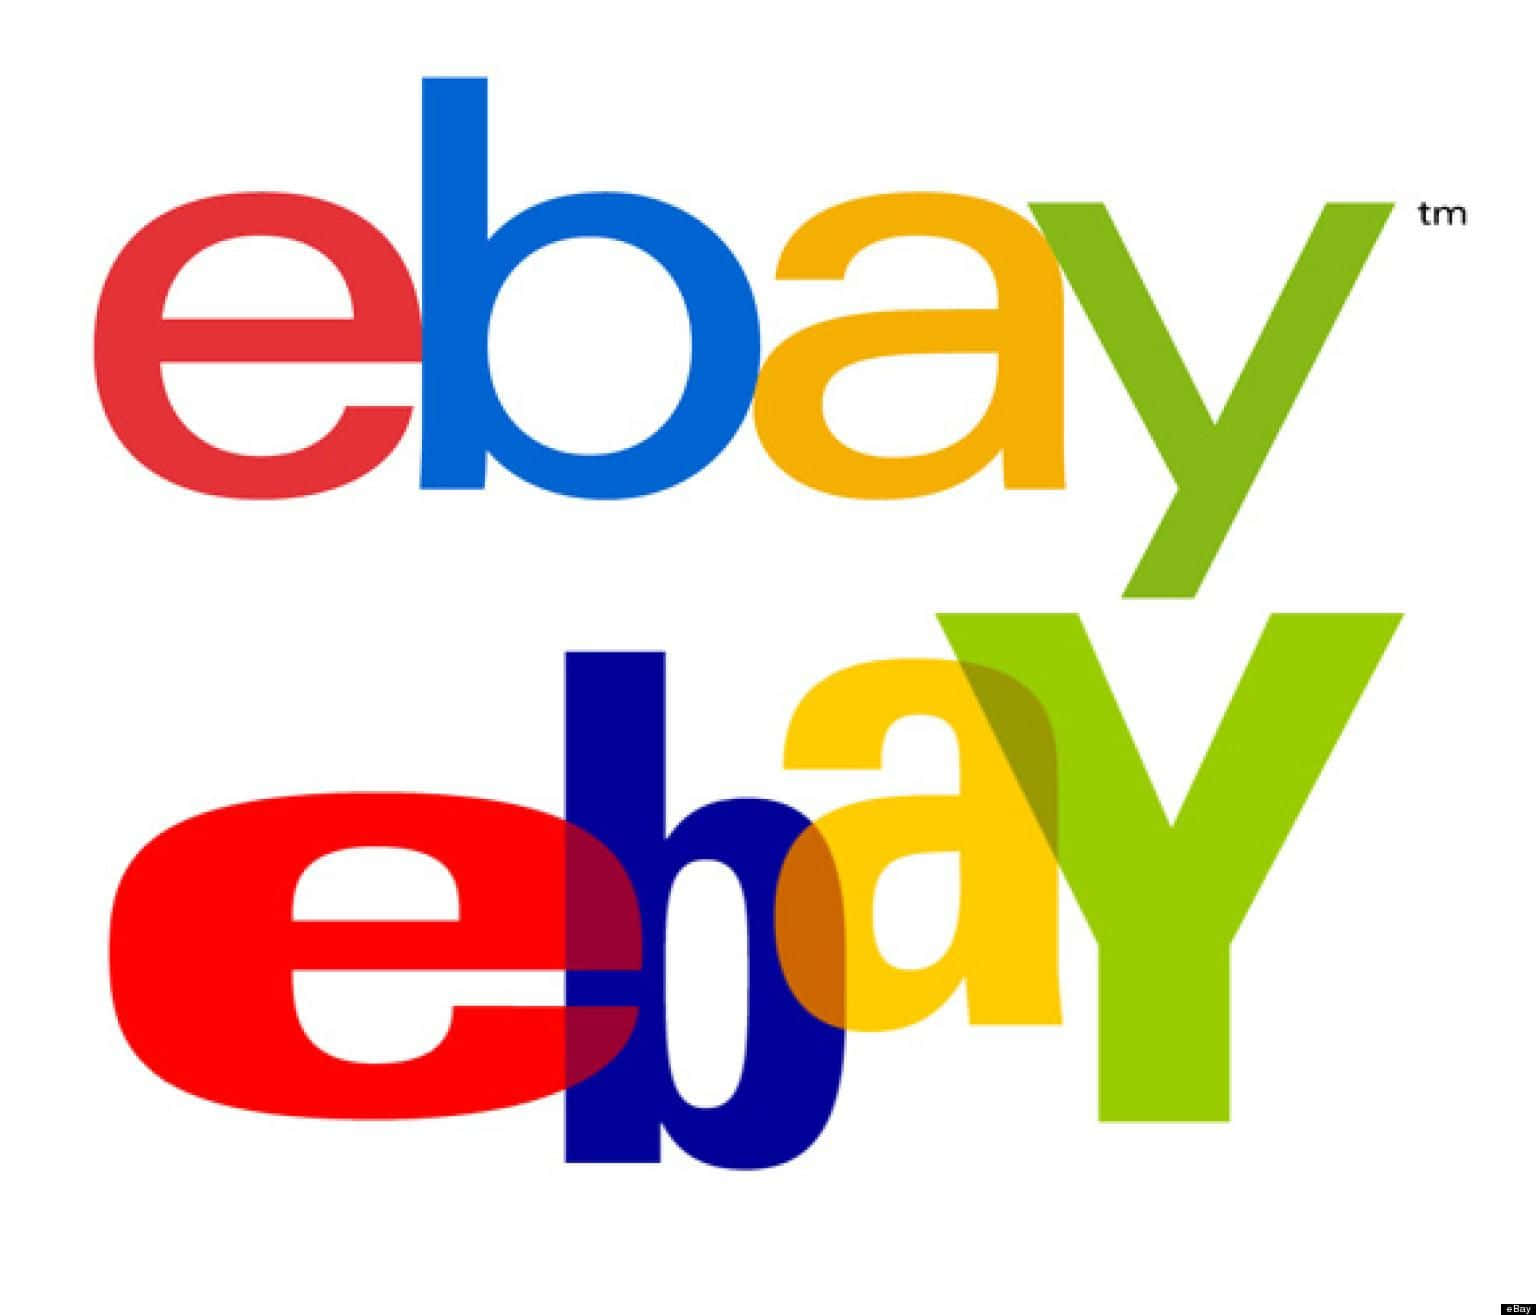 Zweiverschiedene Ebay Uk Logos Wallpaper